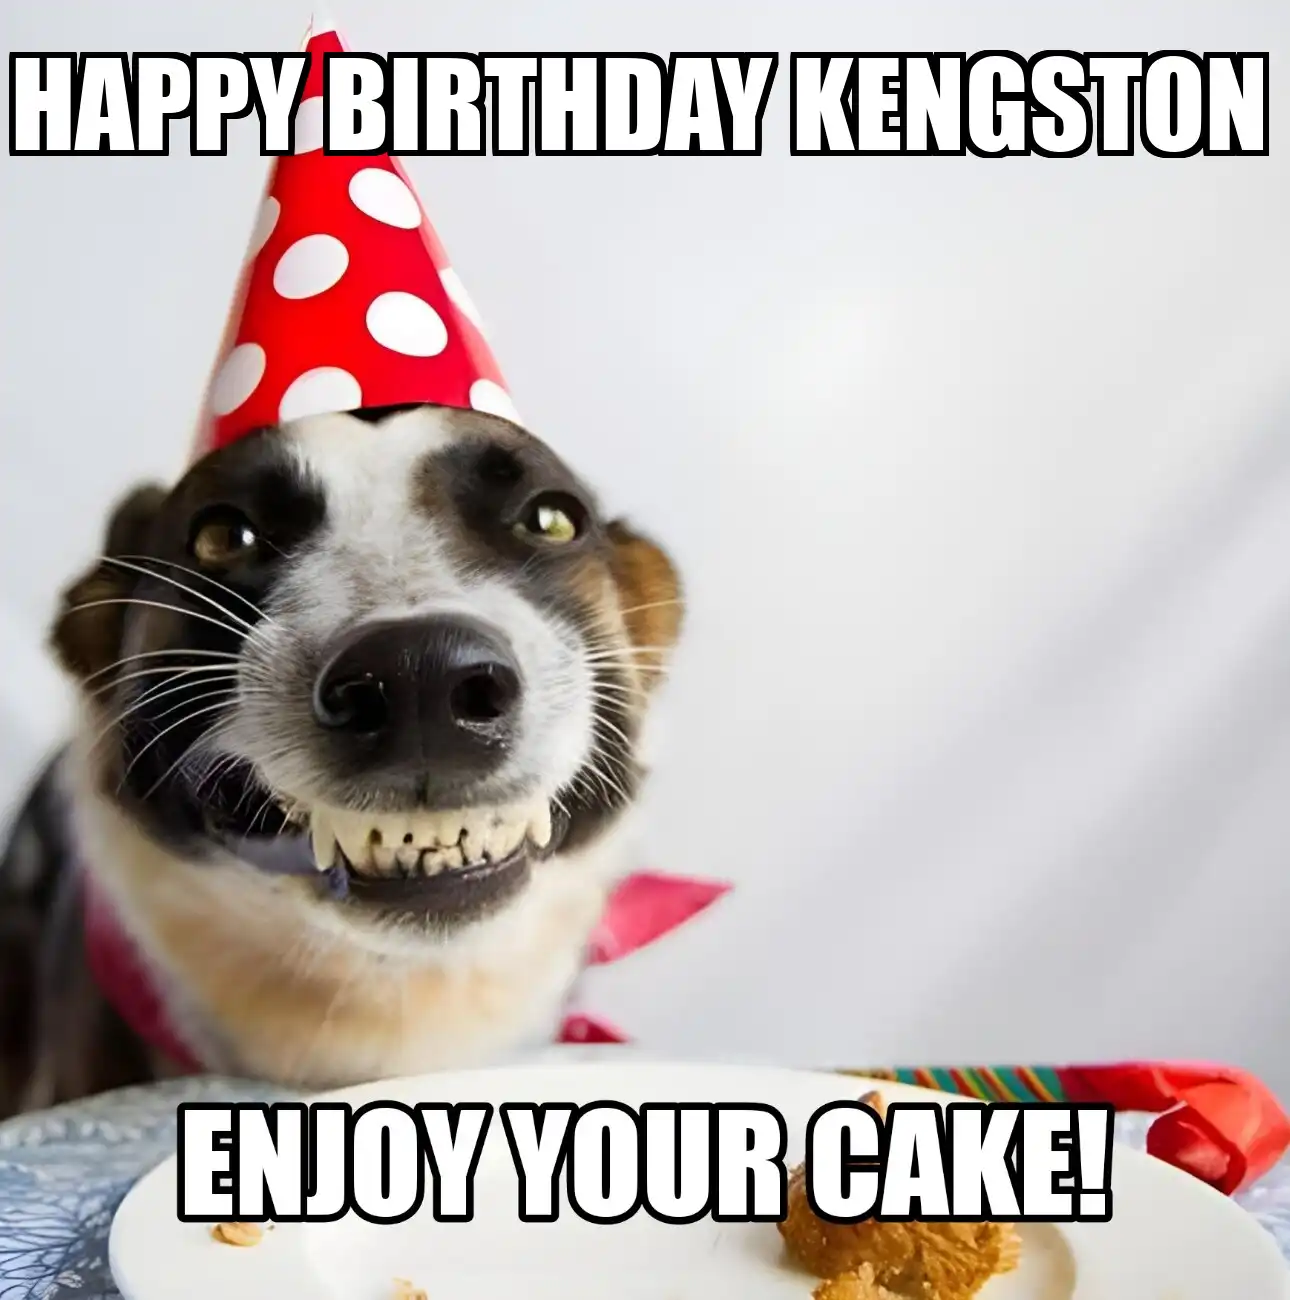 Happy Birthday Kengston Enjoy Your Cake Dog Meme